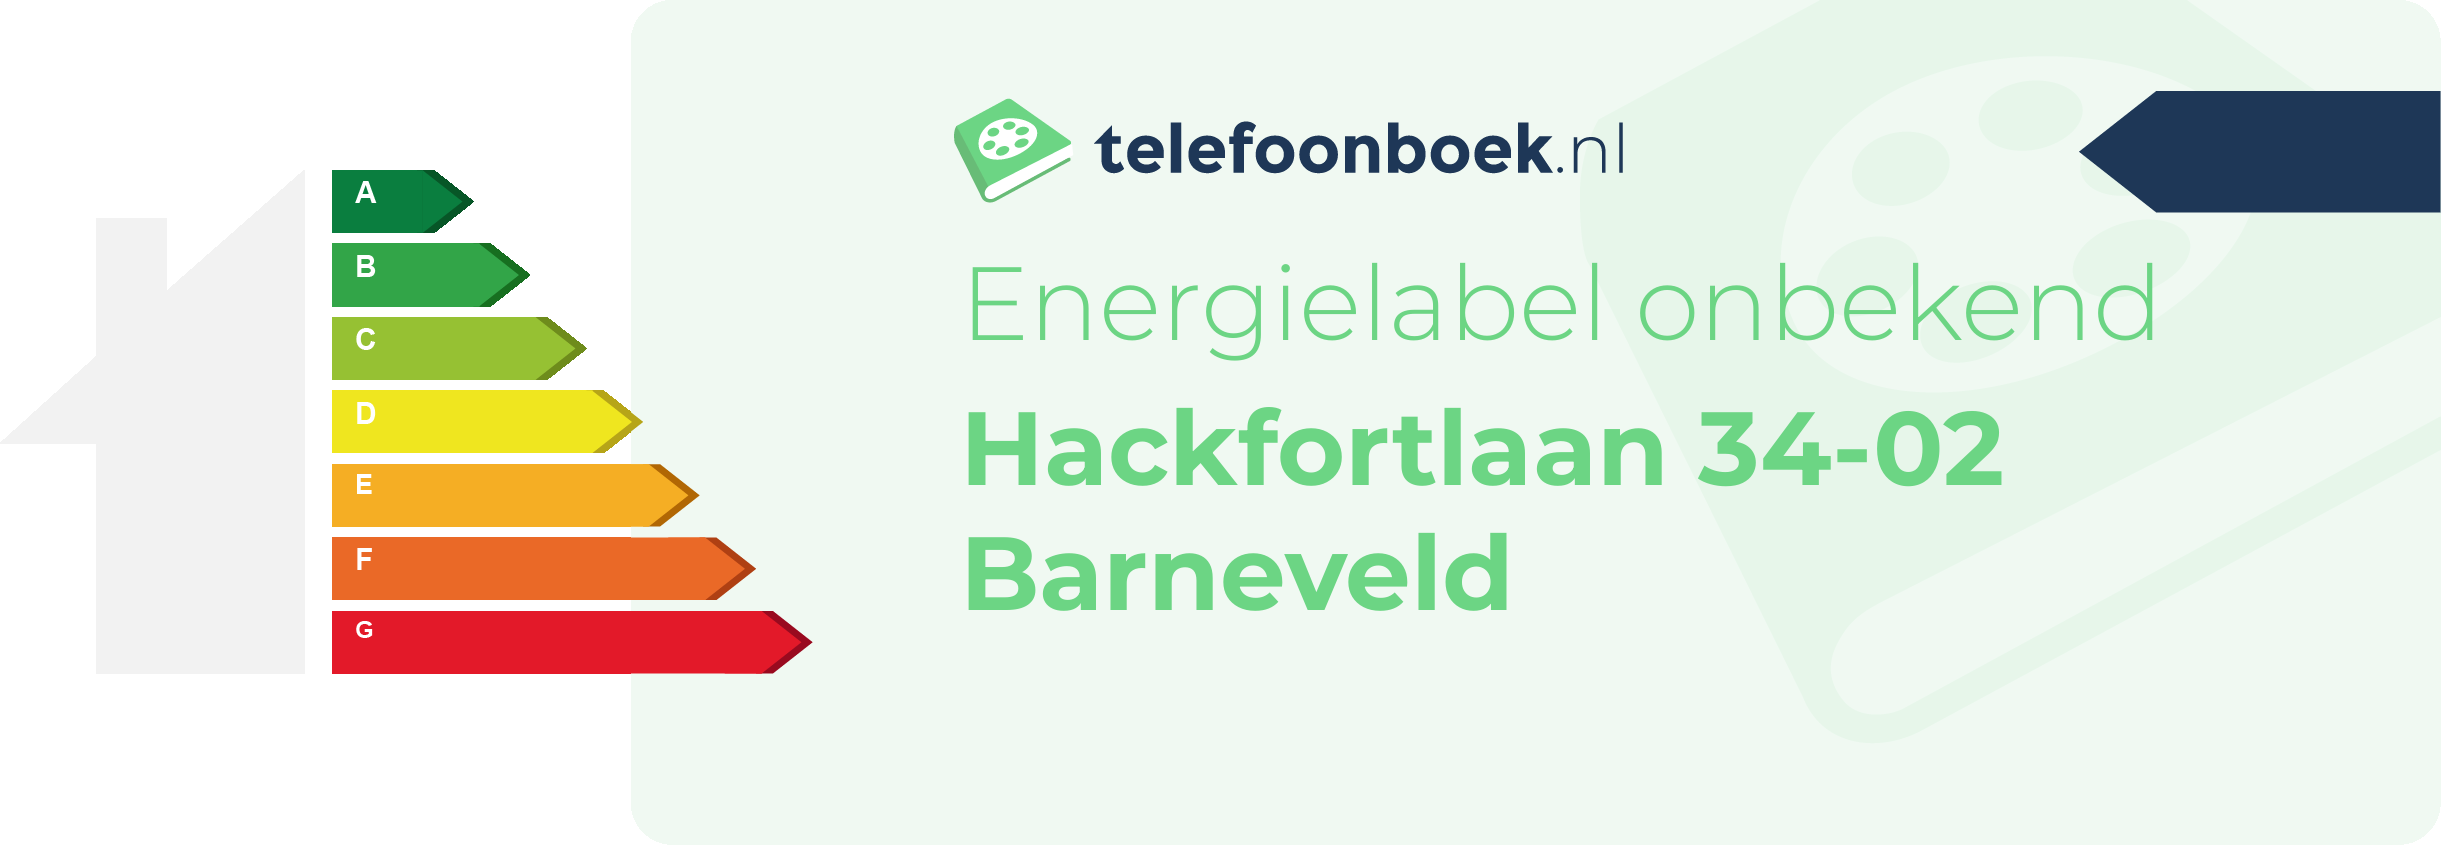 Energielabel Hackfortlaan 34-02 Barneveld